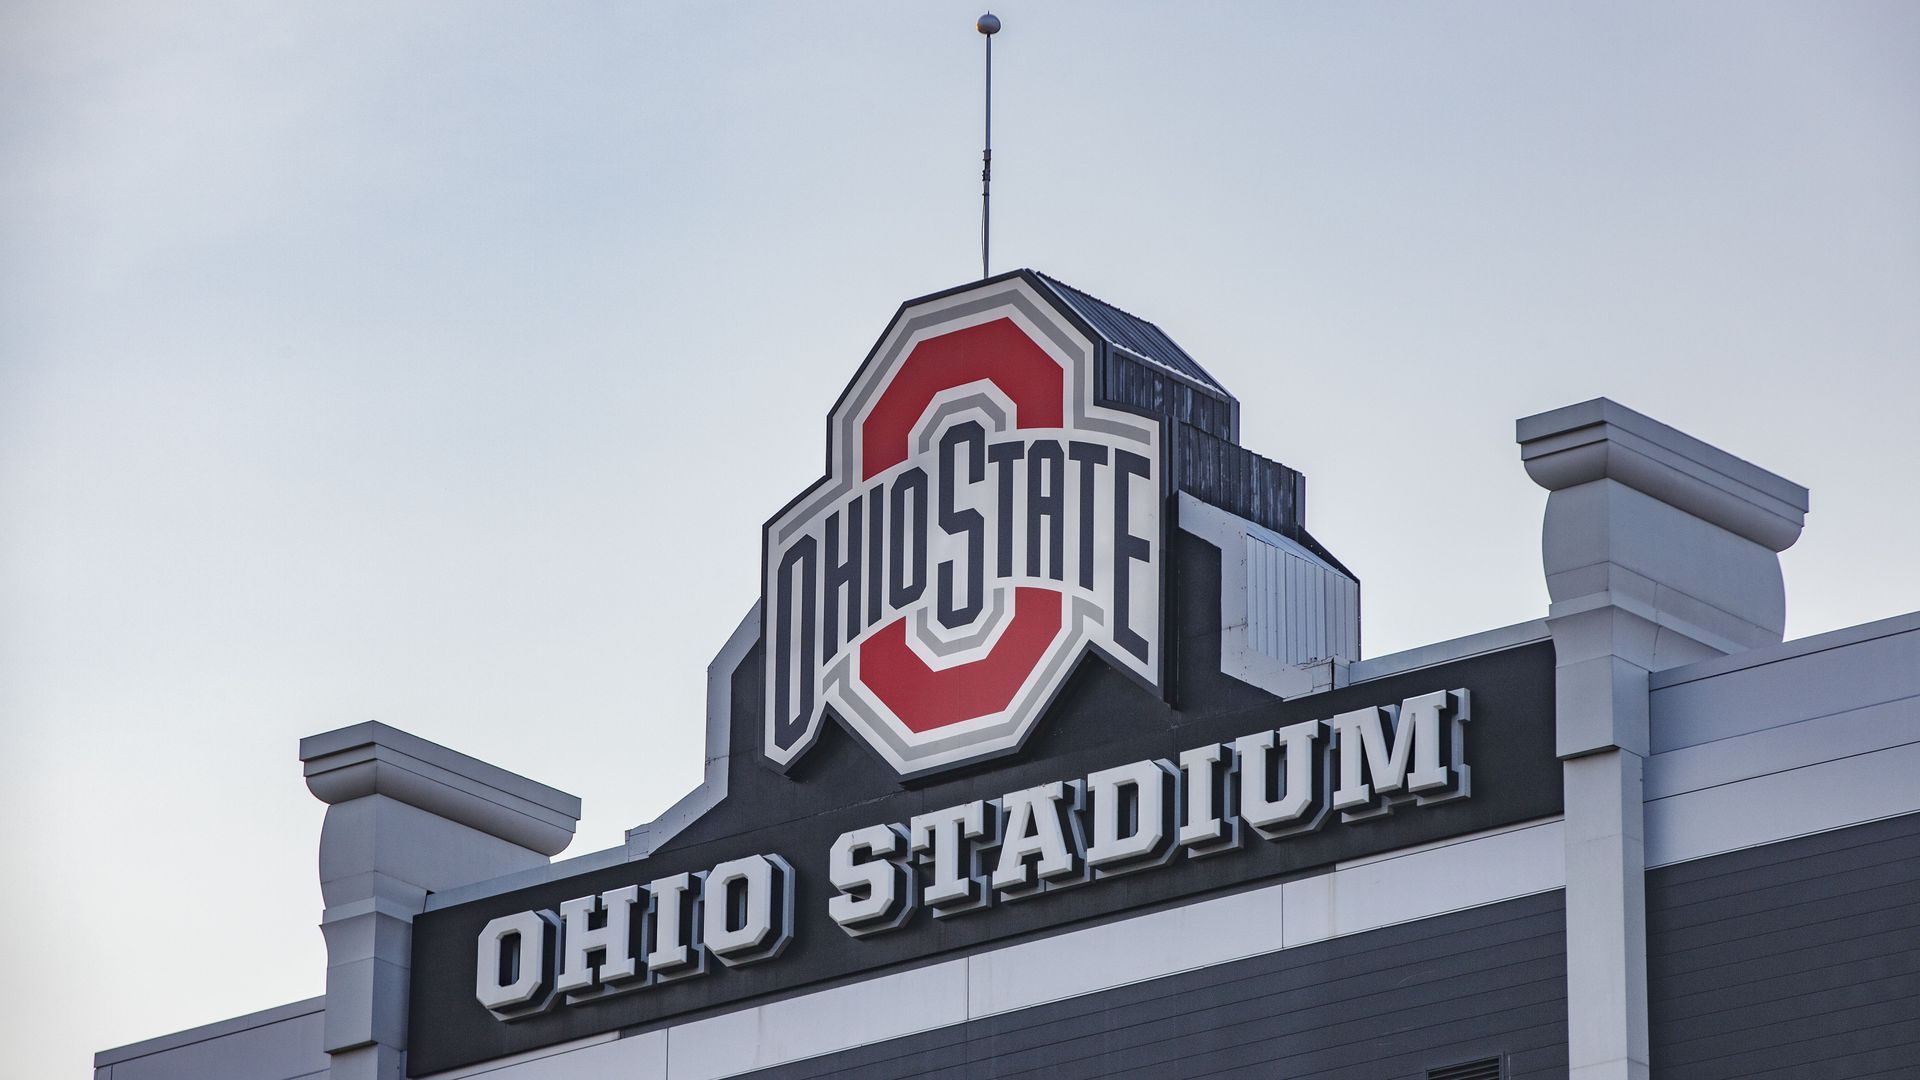 The sign atop Ohio Stadium with the Ohio State logo